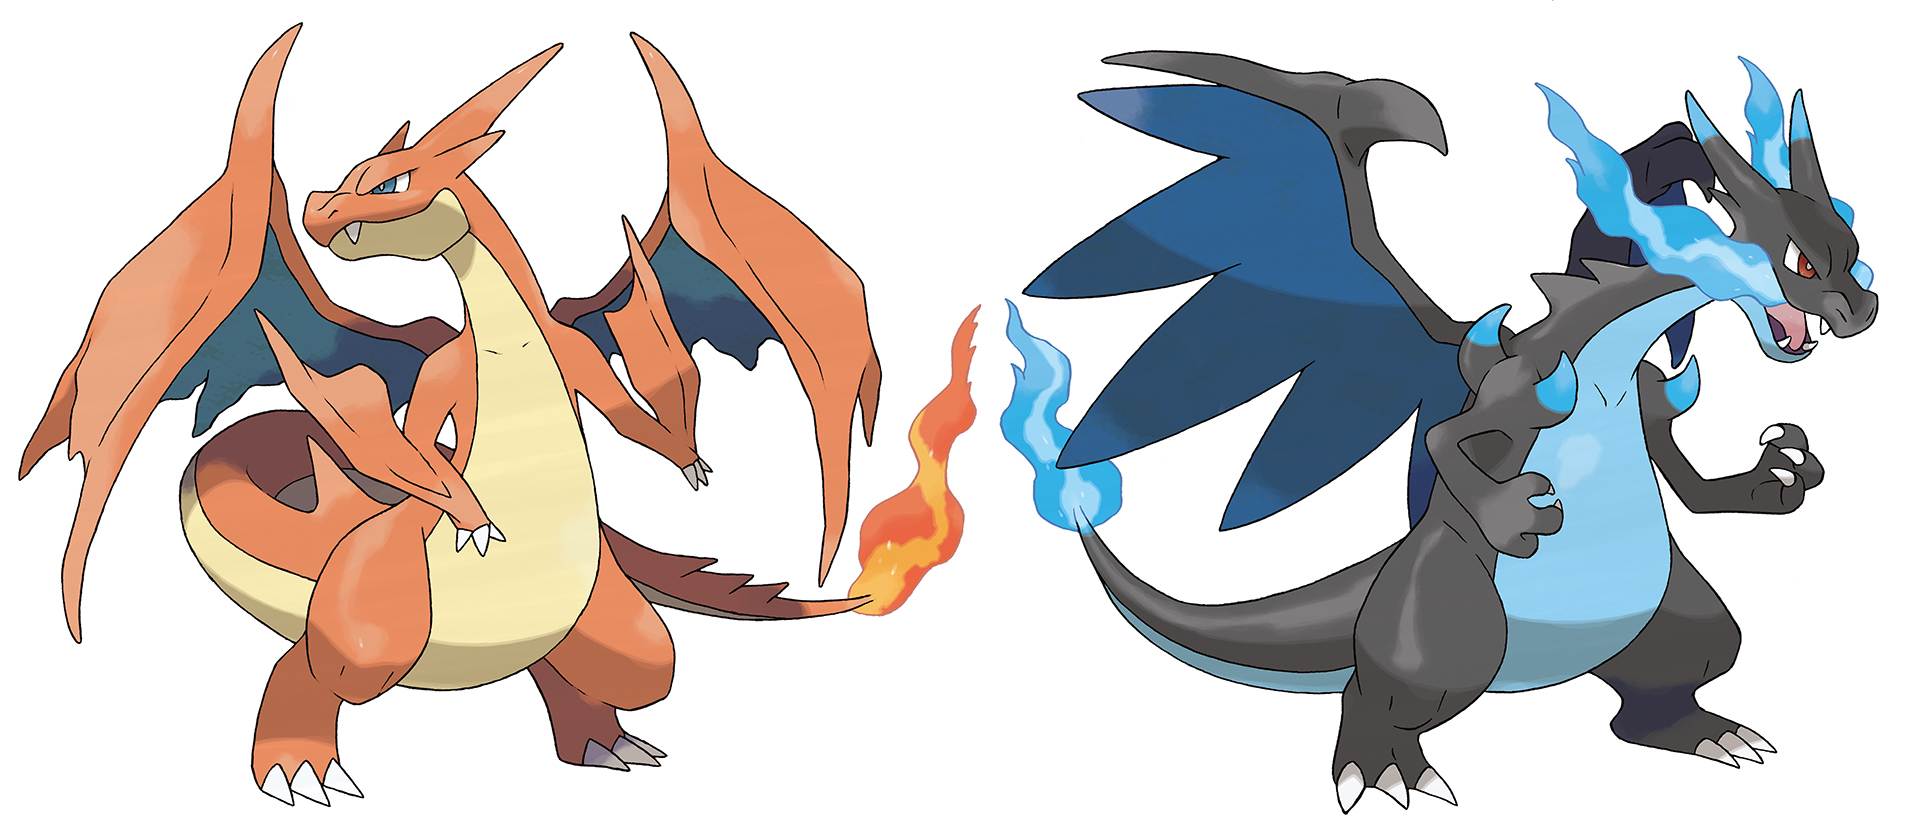 Pokémon: Why Mega Charizard X Has Blue Flames